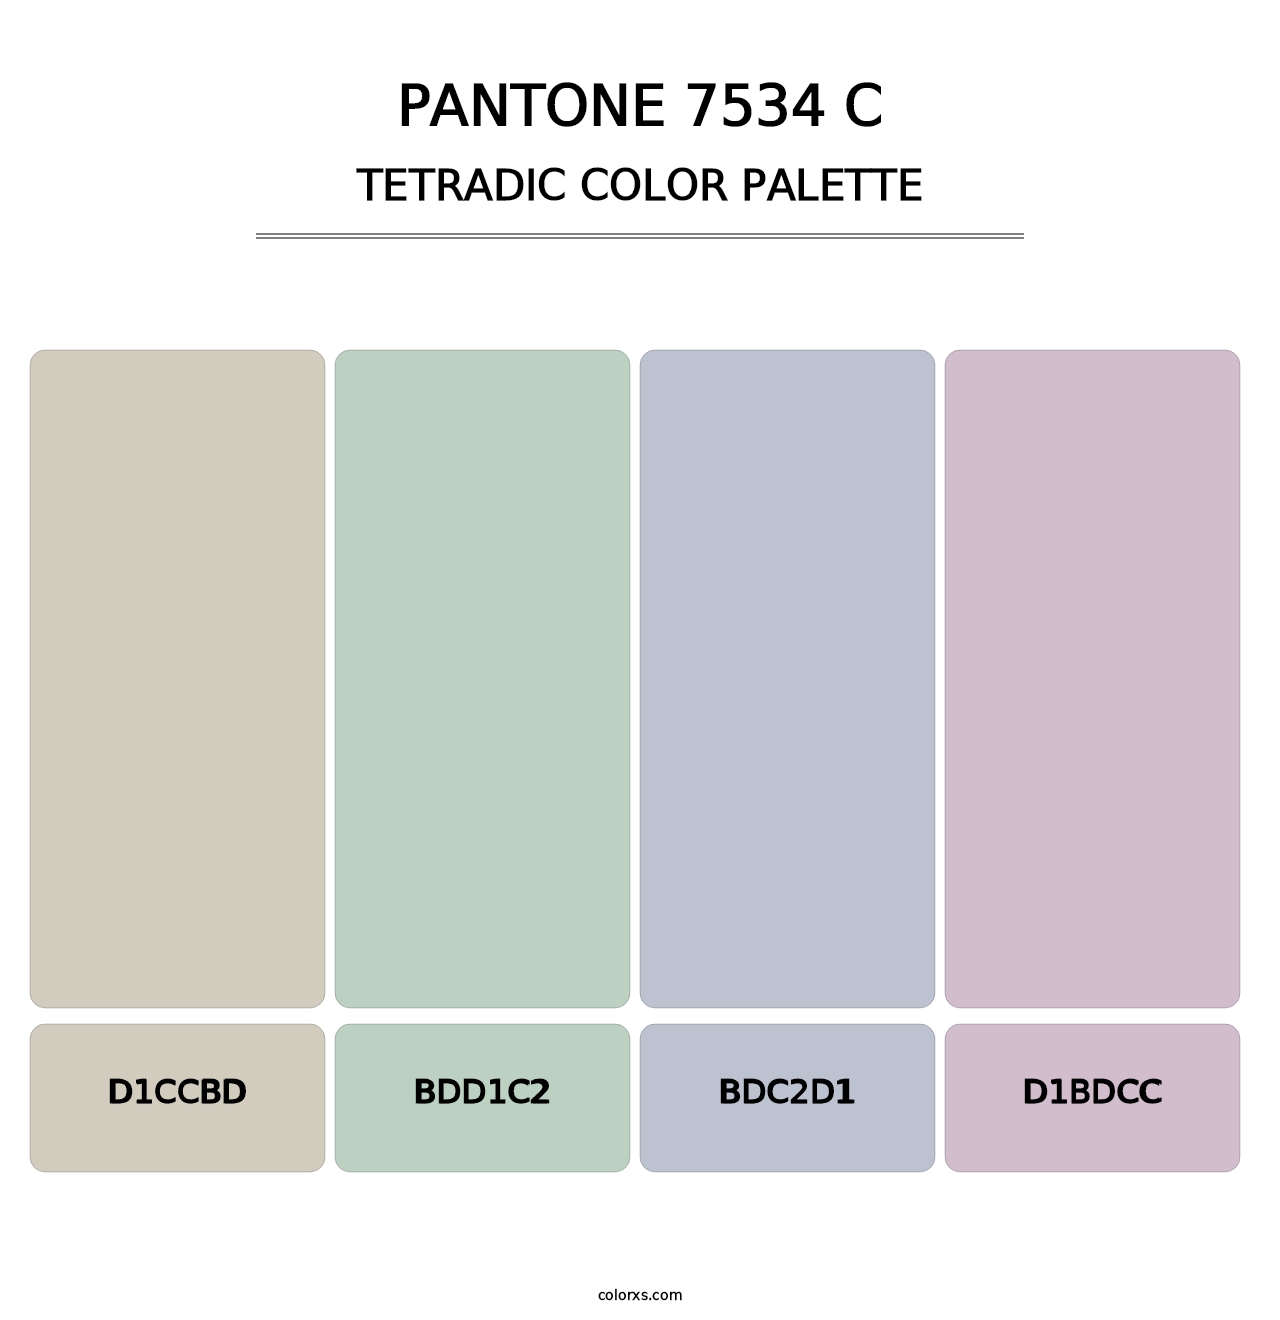 PANTONE 7534 C - Tetradic Color Palette